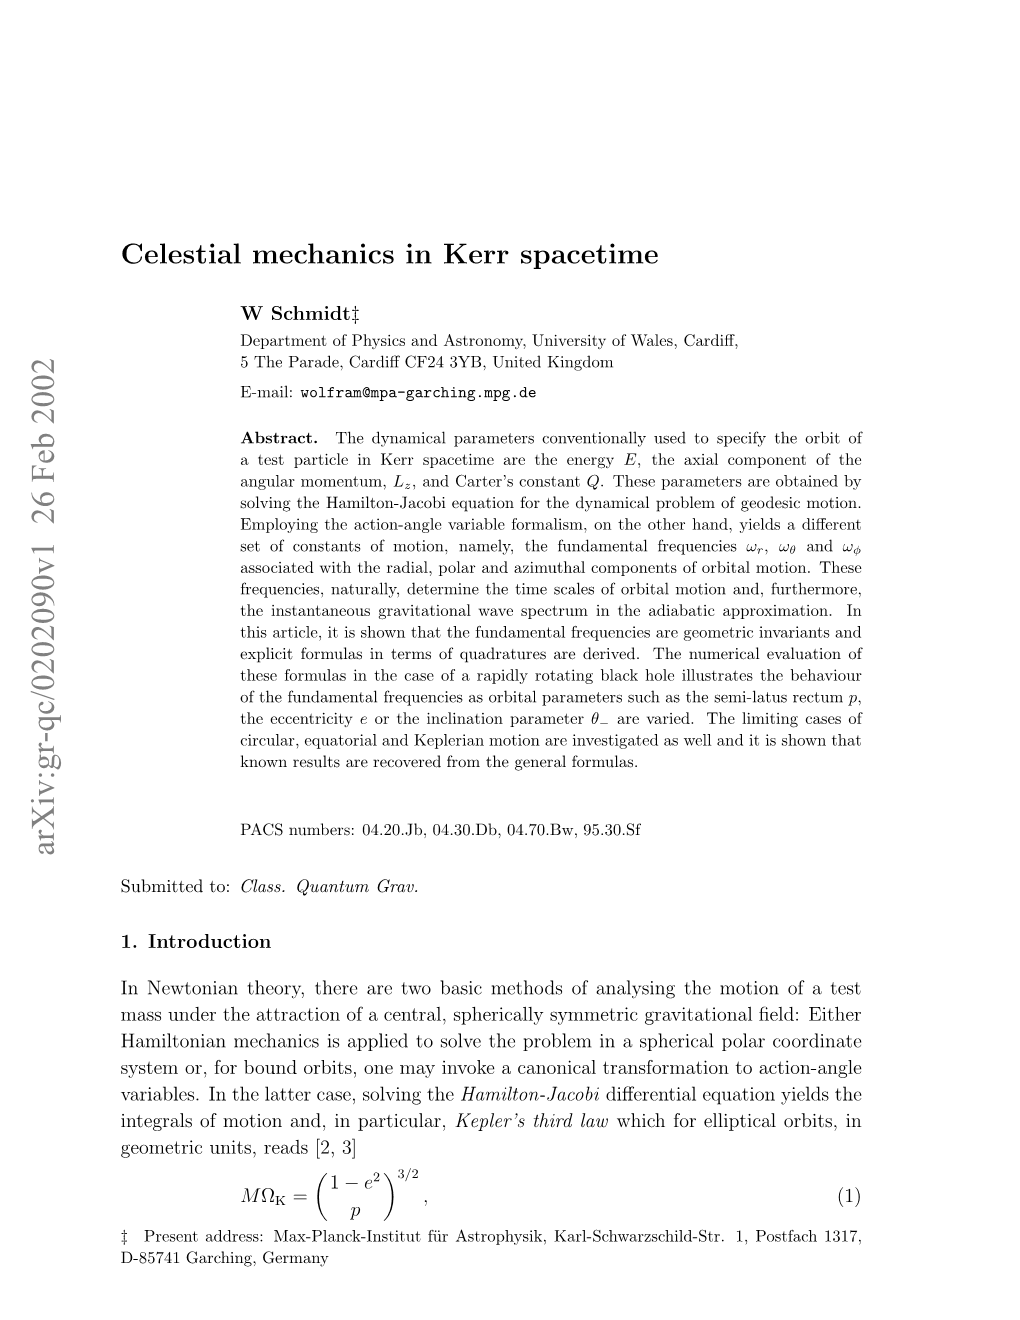 Celestial Mechanics in Kerr Spacetime 2